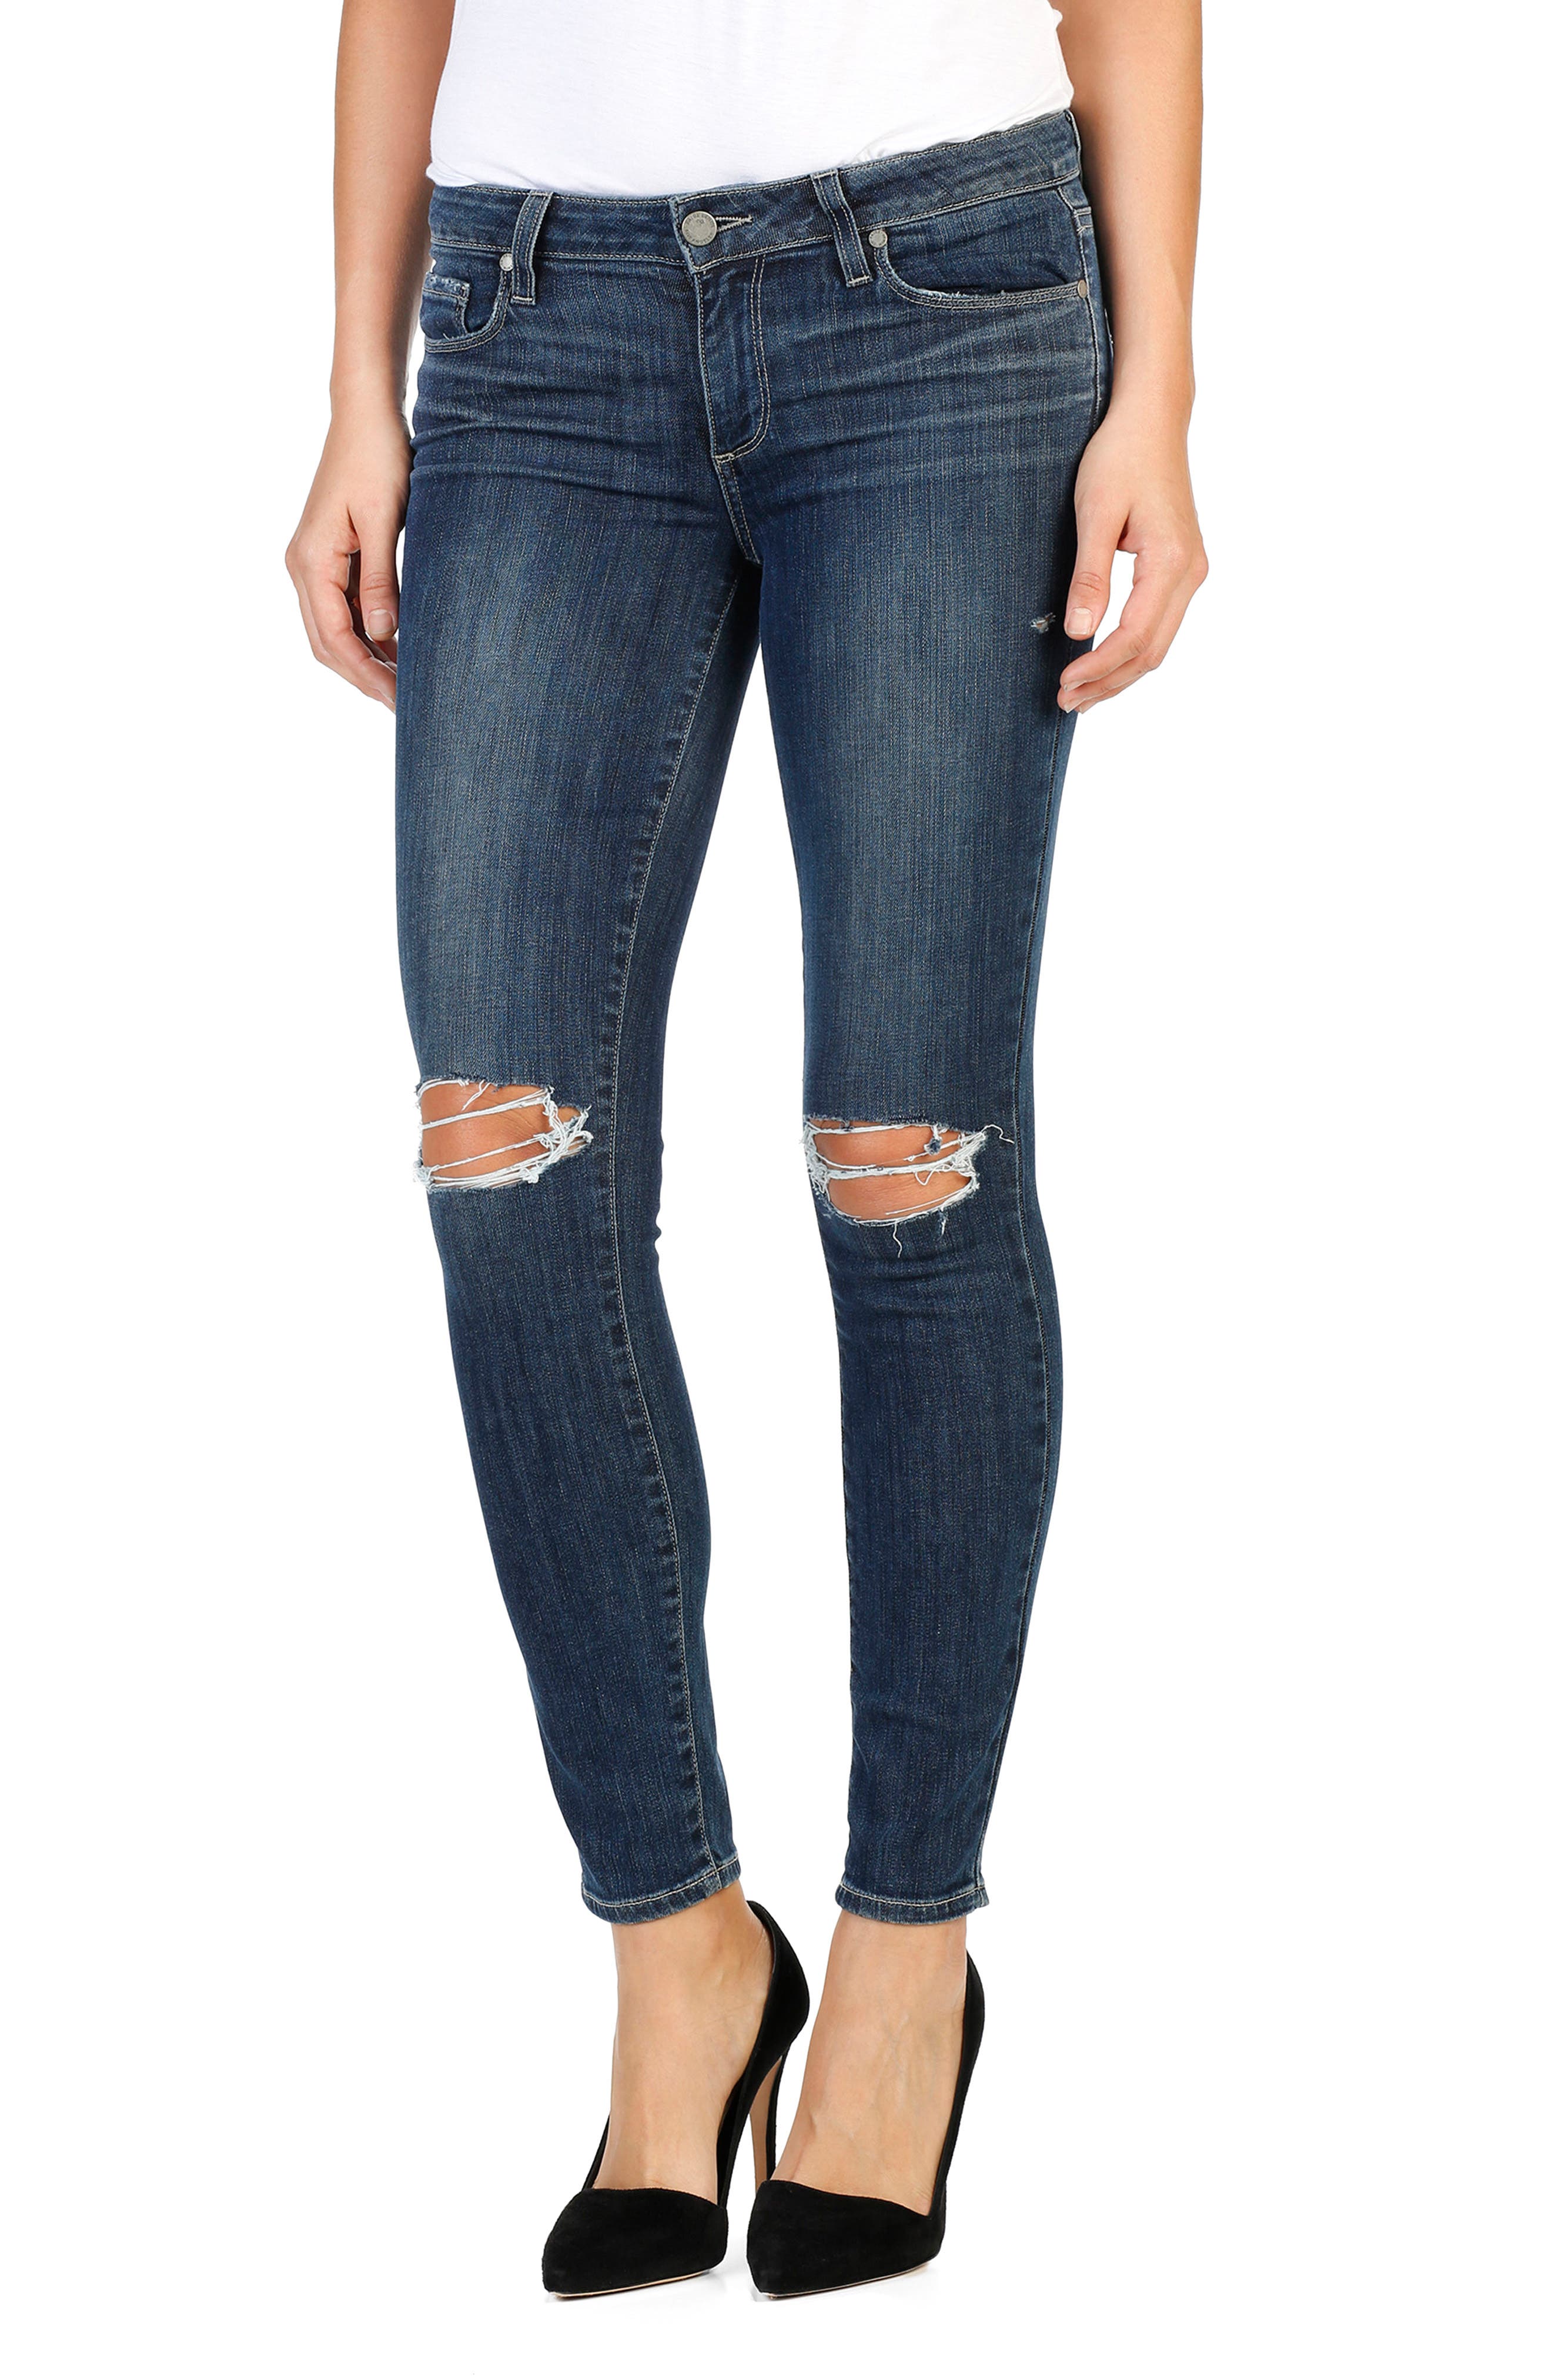 paige skinny jeans nordstrom rack